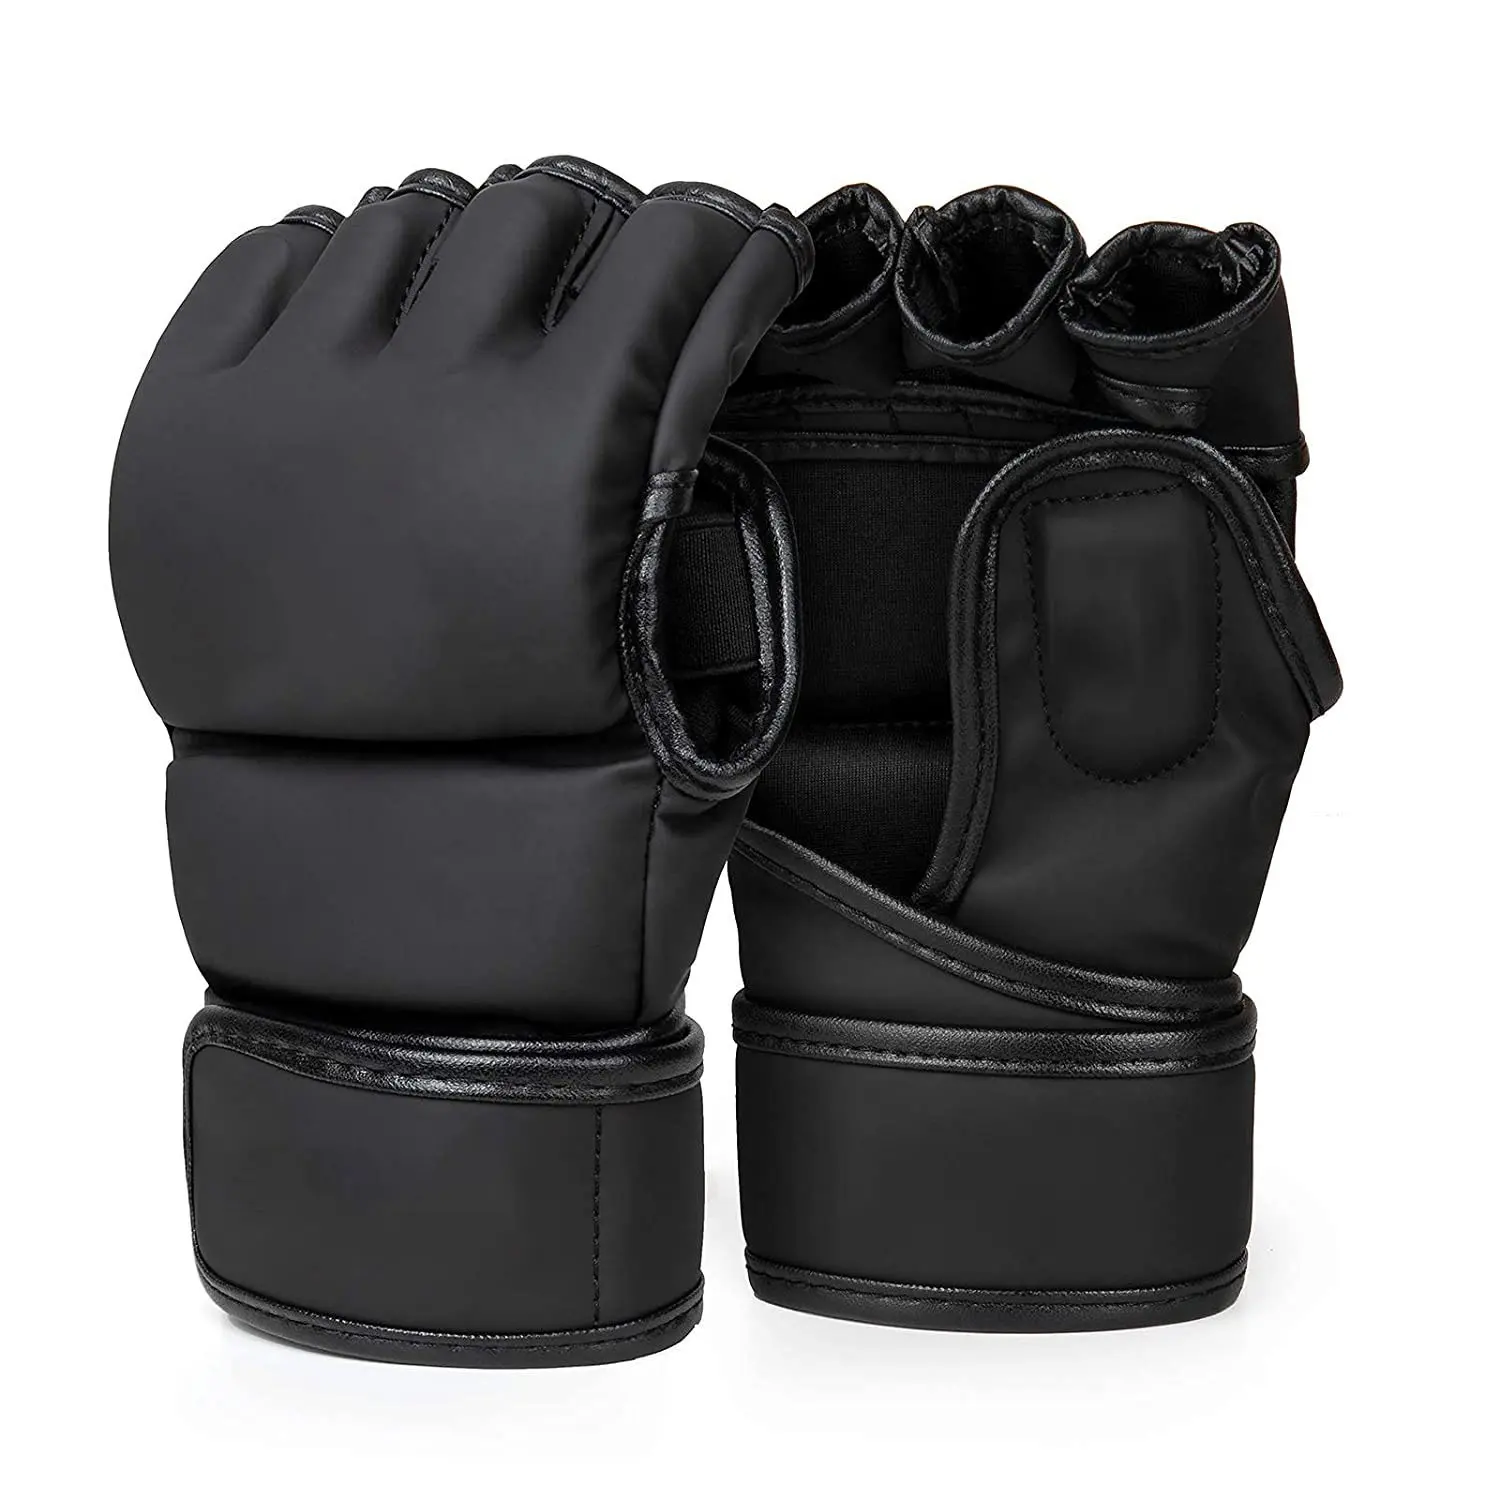 2022 New Wholesale Custom Design Hochwertiger MMA Trainings handschuh Bester Preis PU/Leder Boxing Fight UFC MMA Handschuh